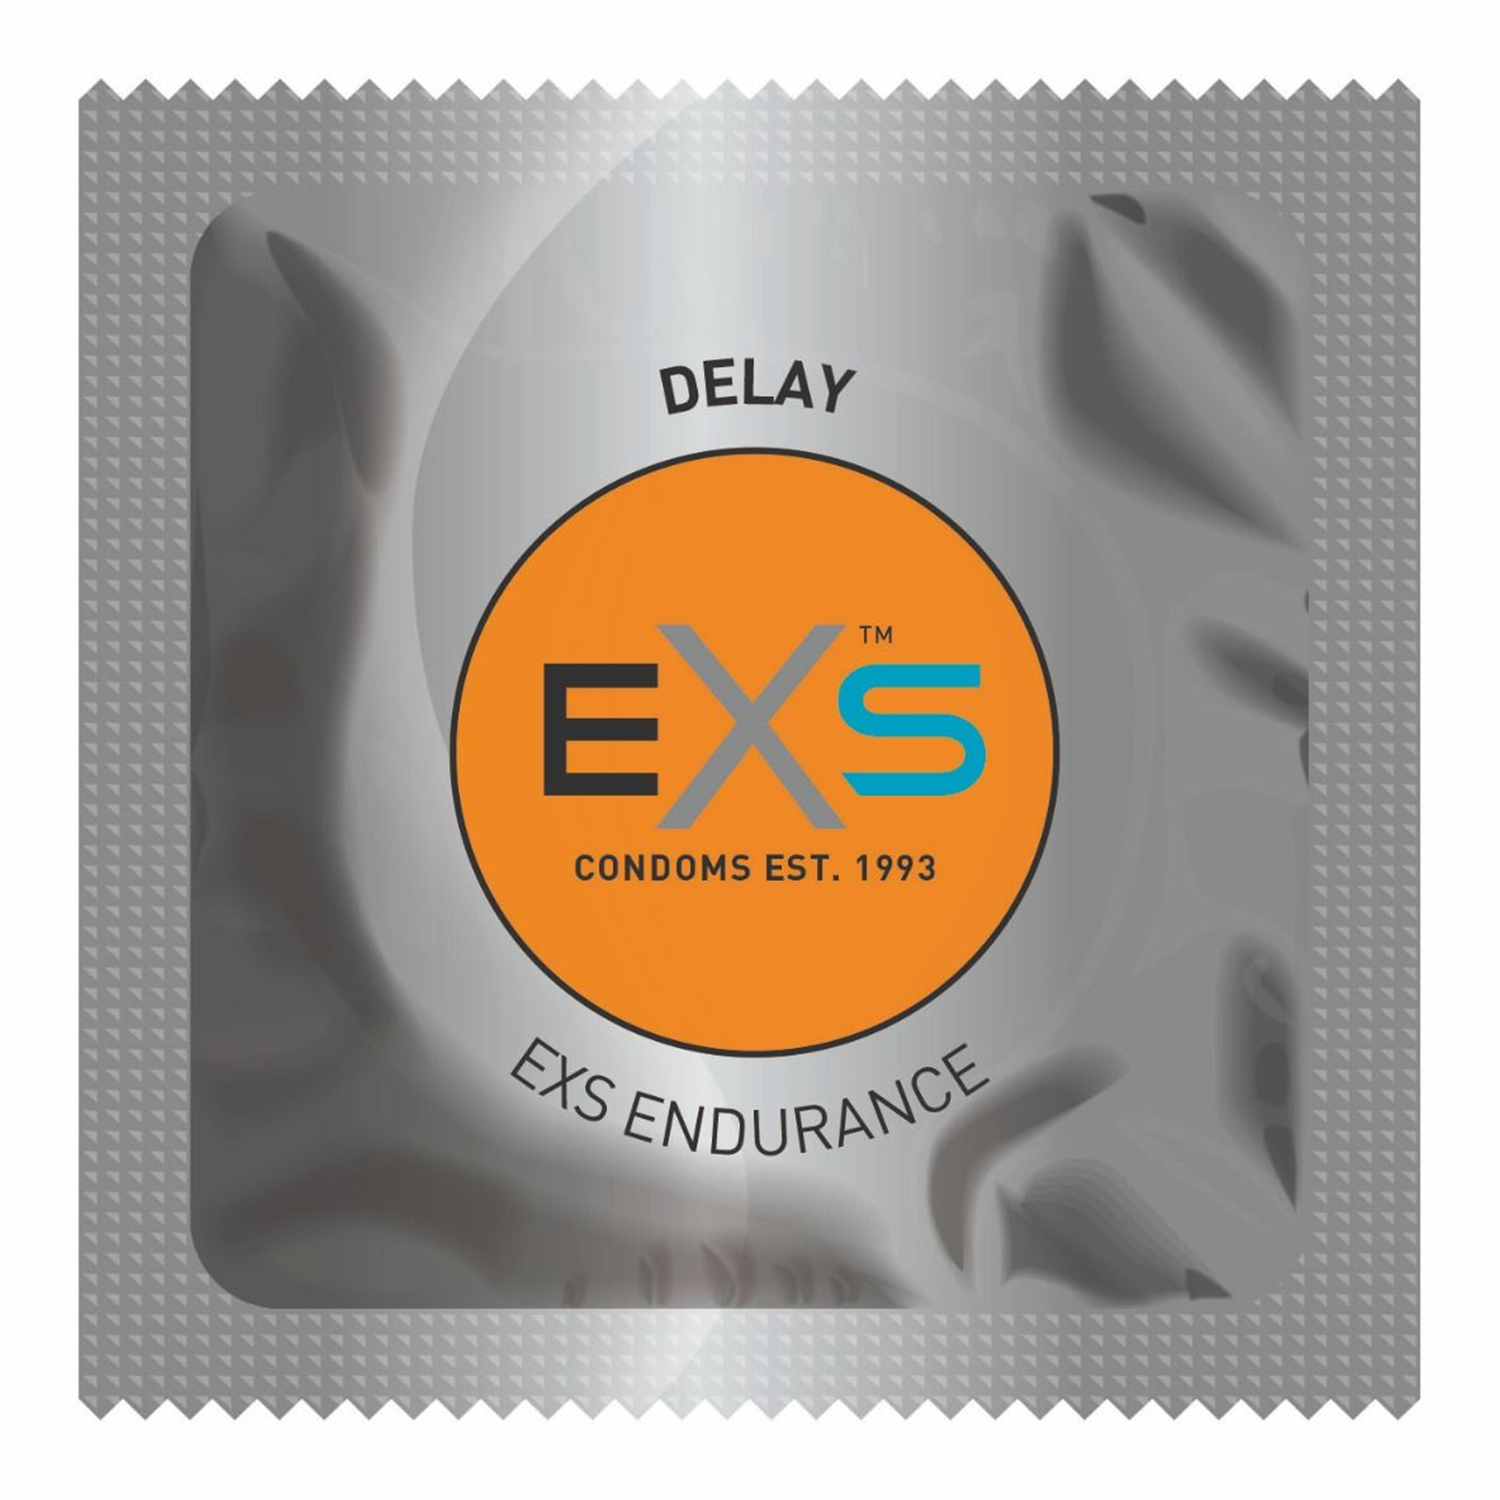 EXS Delay Condoms | Pack of 144 (4)